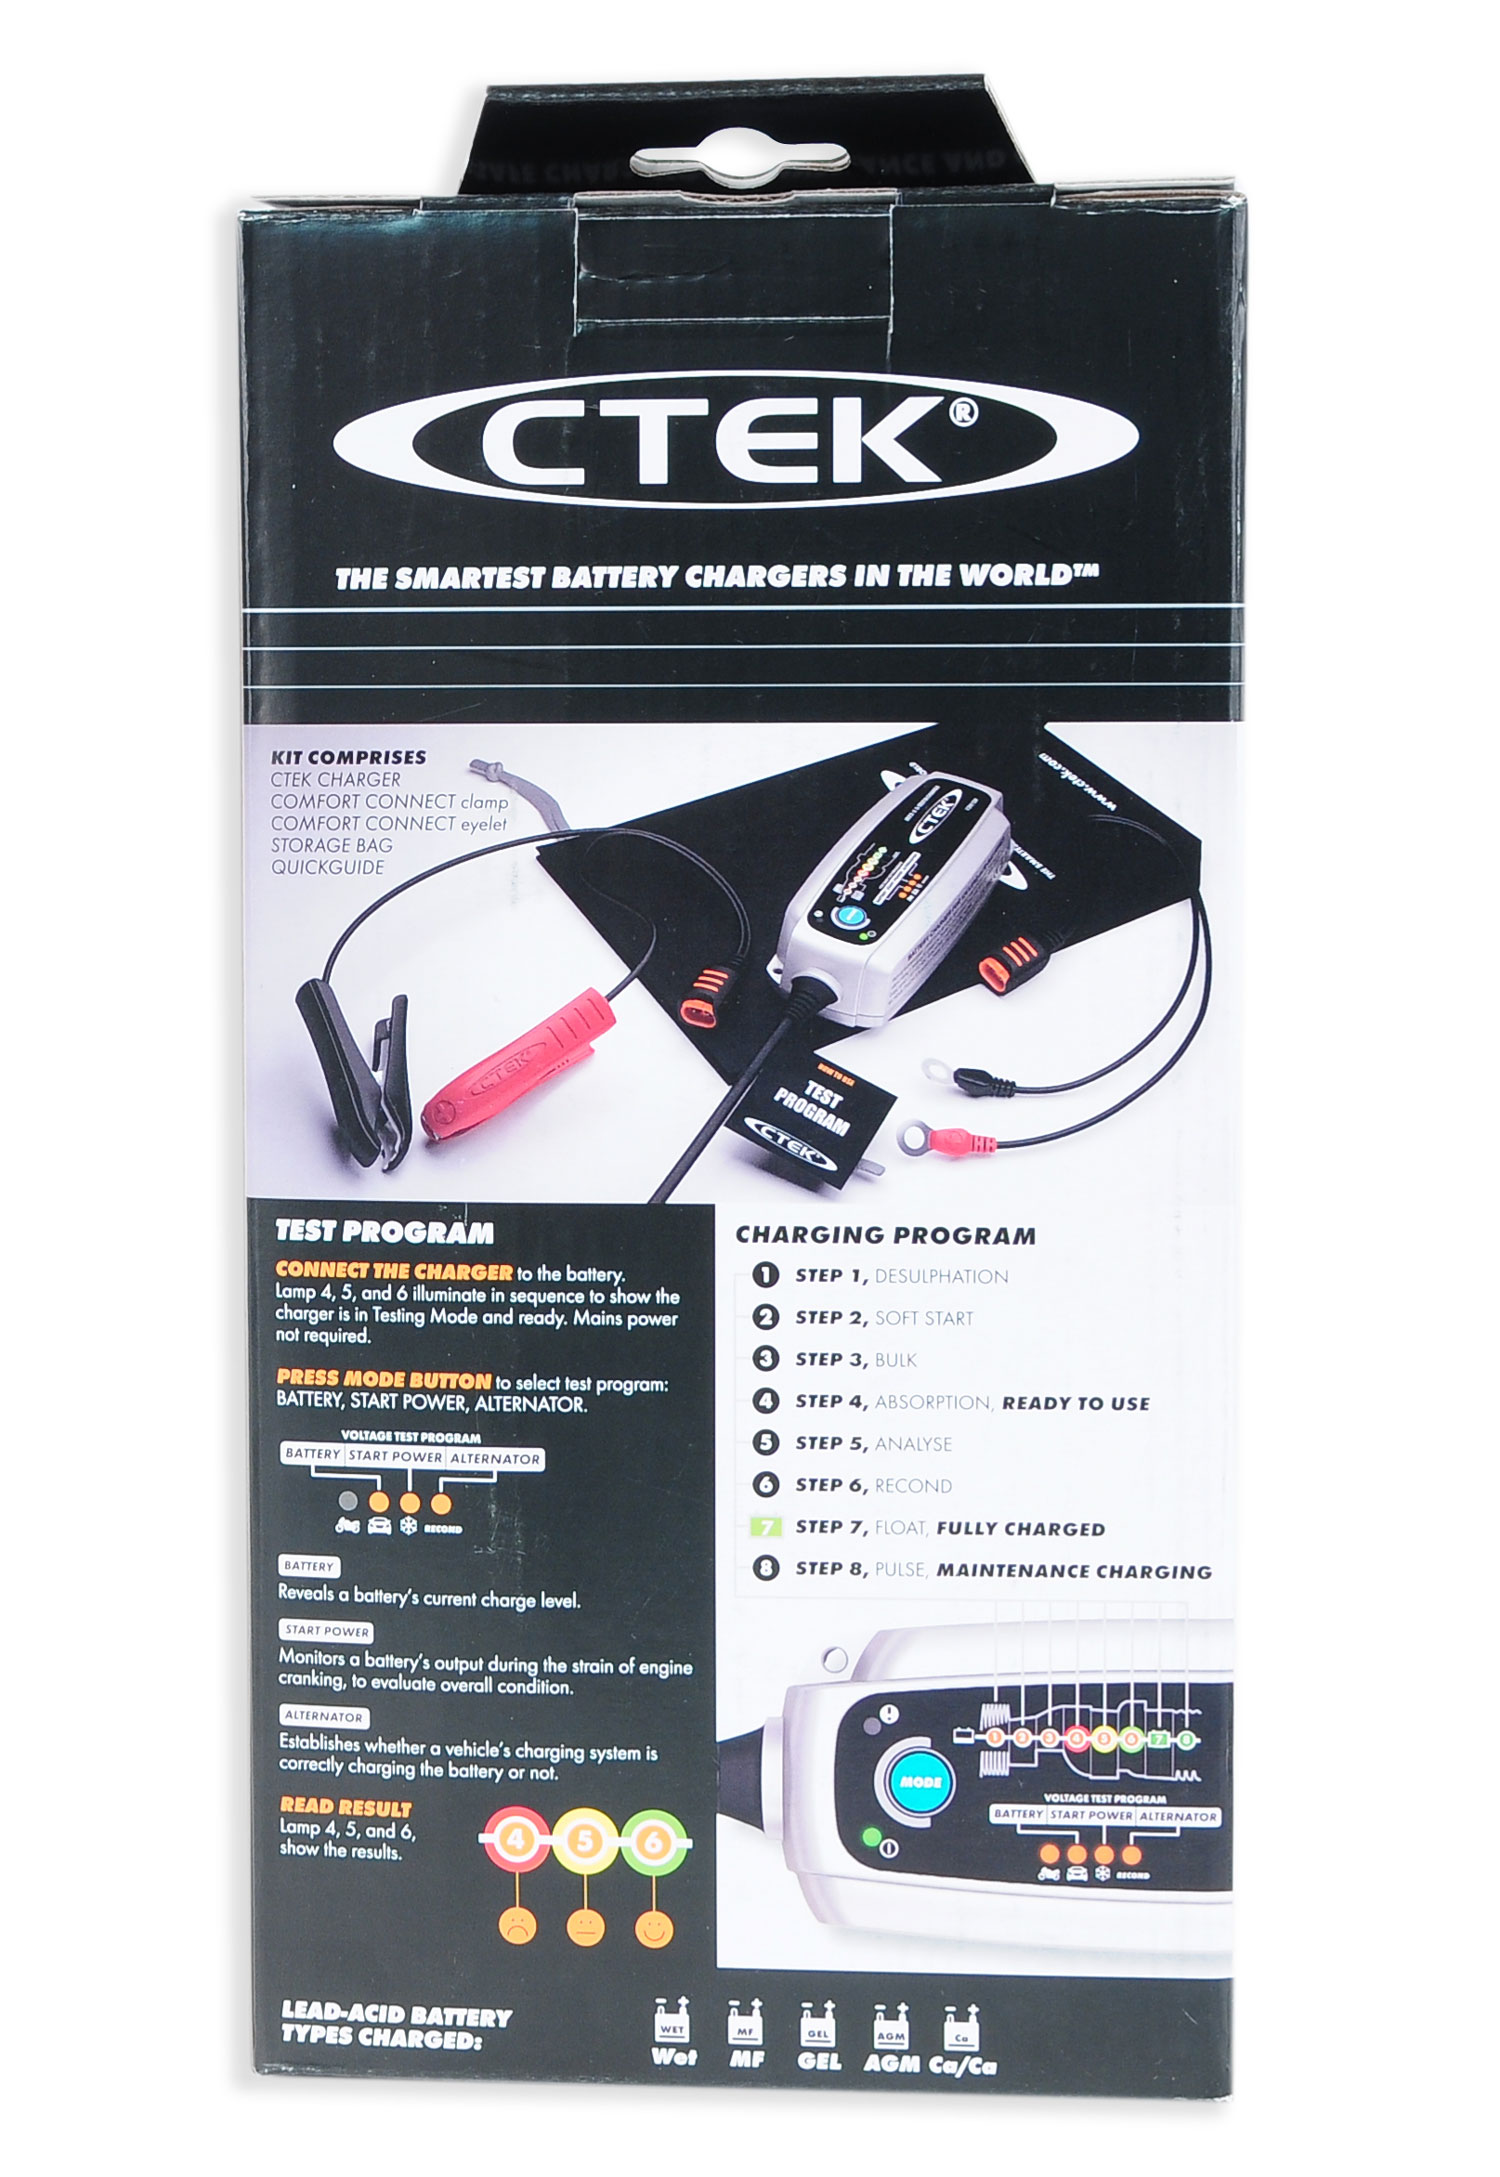 Ctek MXS 5.0 Test & Charge (56-308)